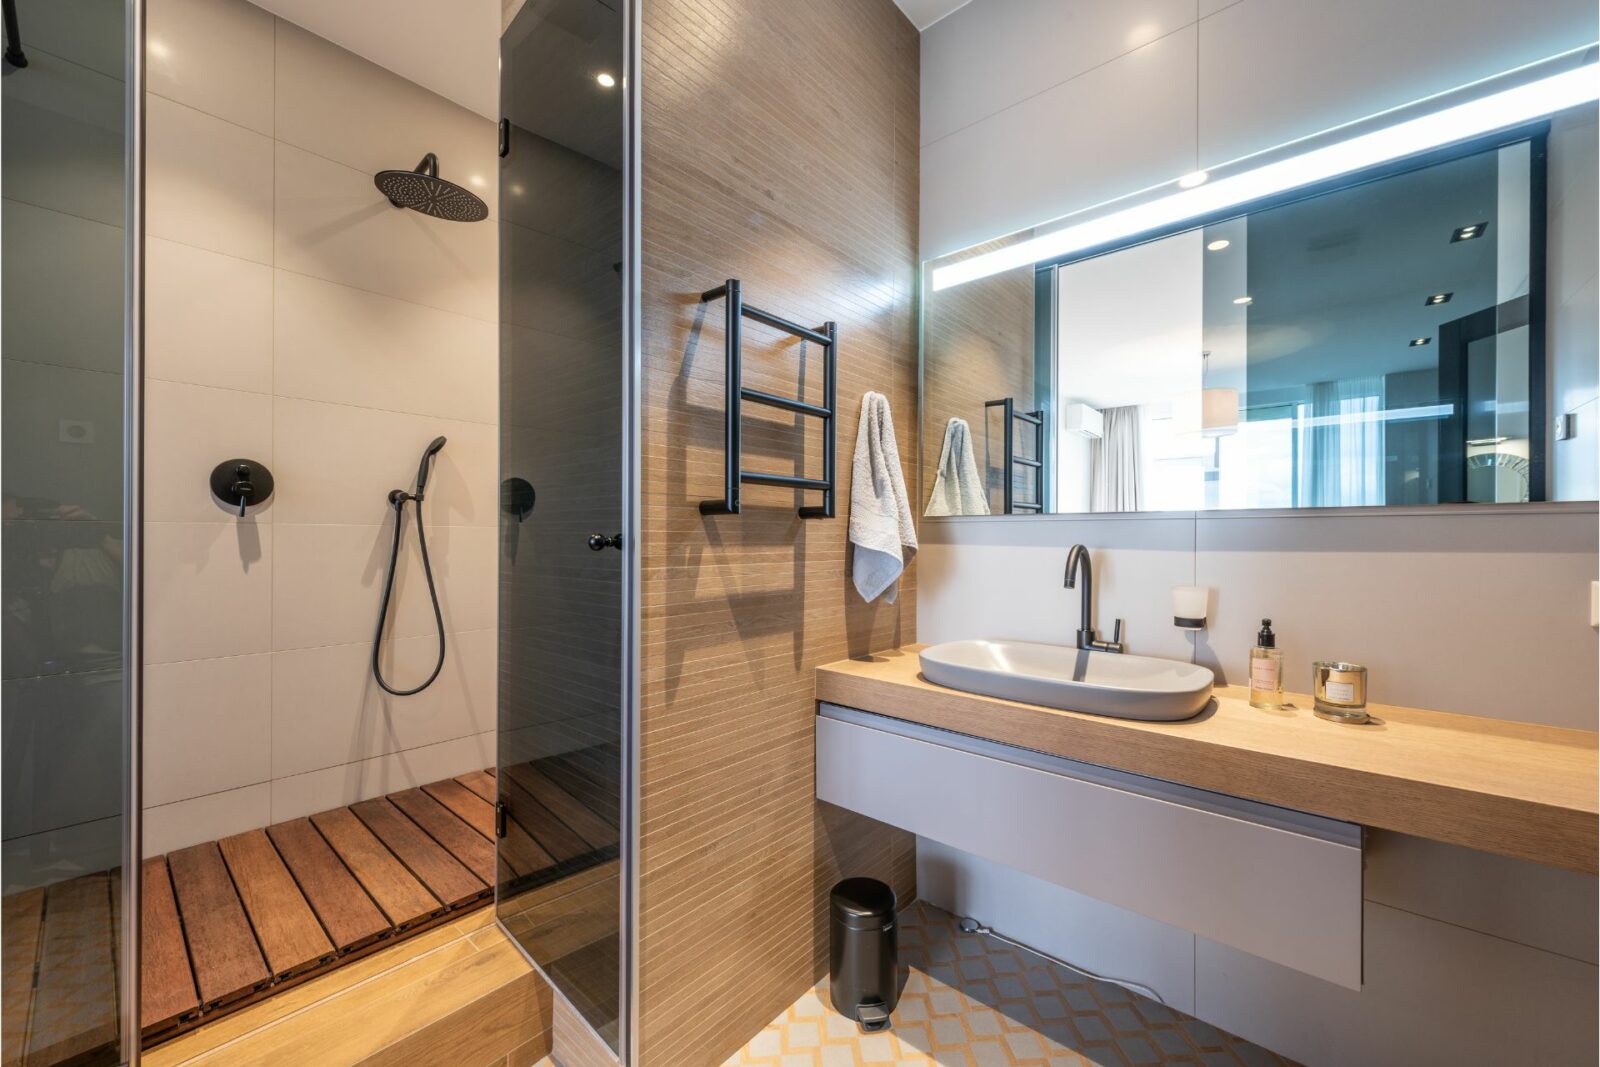 5x8 bathroom with walk in shower layout